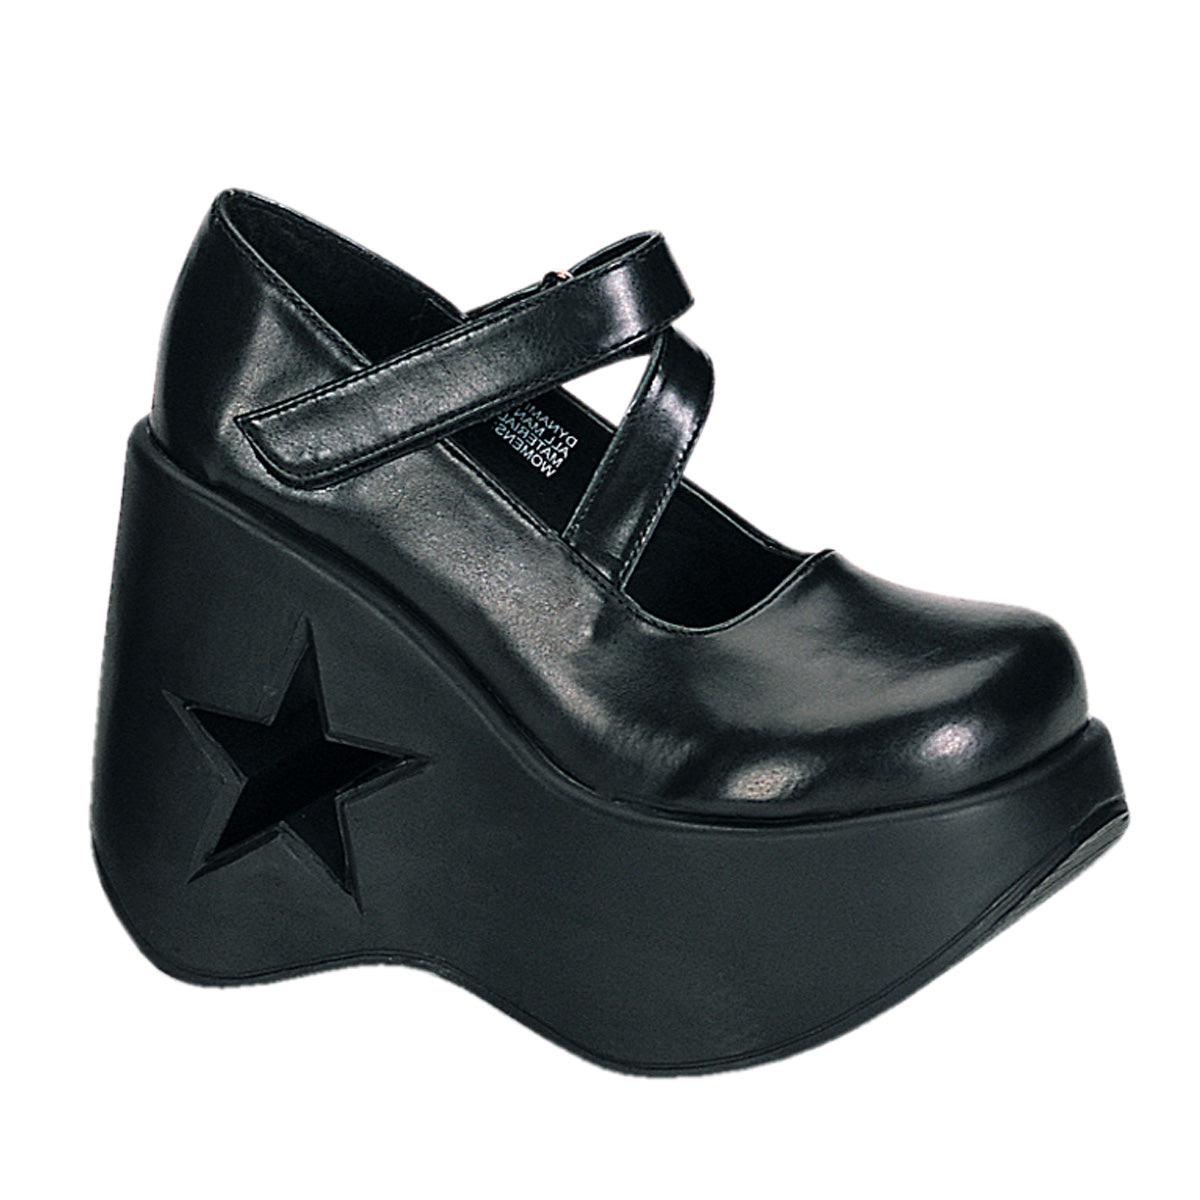 DYNAMITE-03 Alternative Footwear Demonia Women's Heels & Platform Shoes Blk Vegan Leather